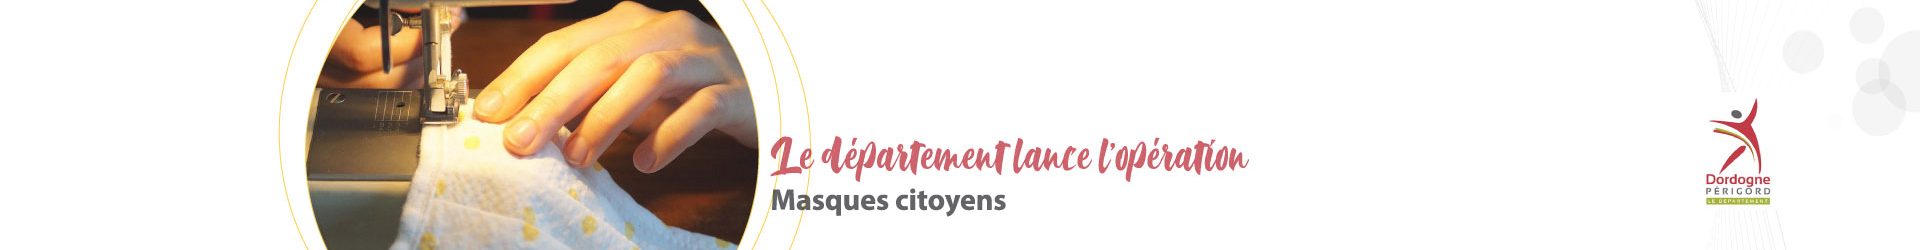 Dordogne-Périgord  : Opération masques citoyens